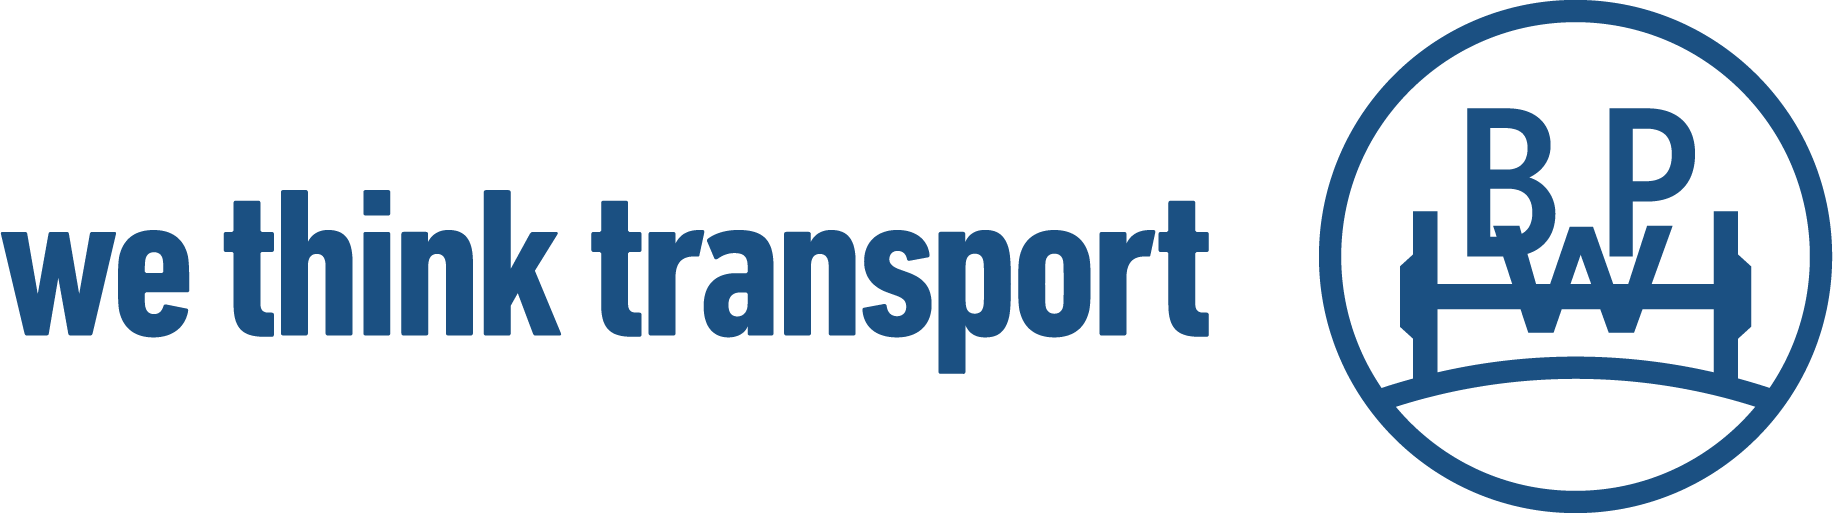 BPW - we think transport